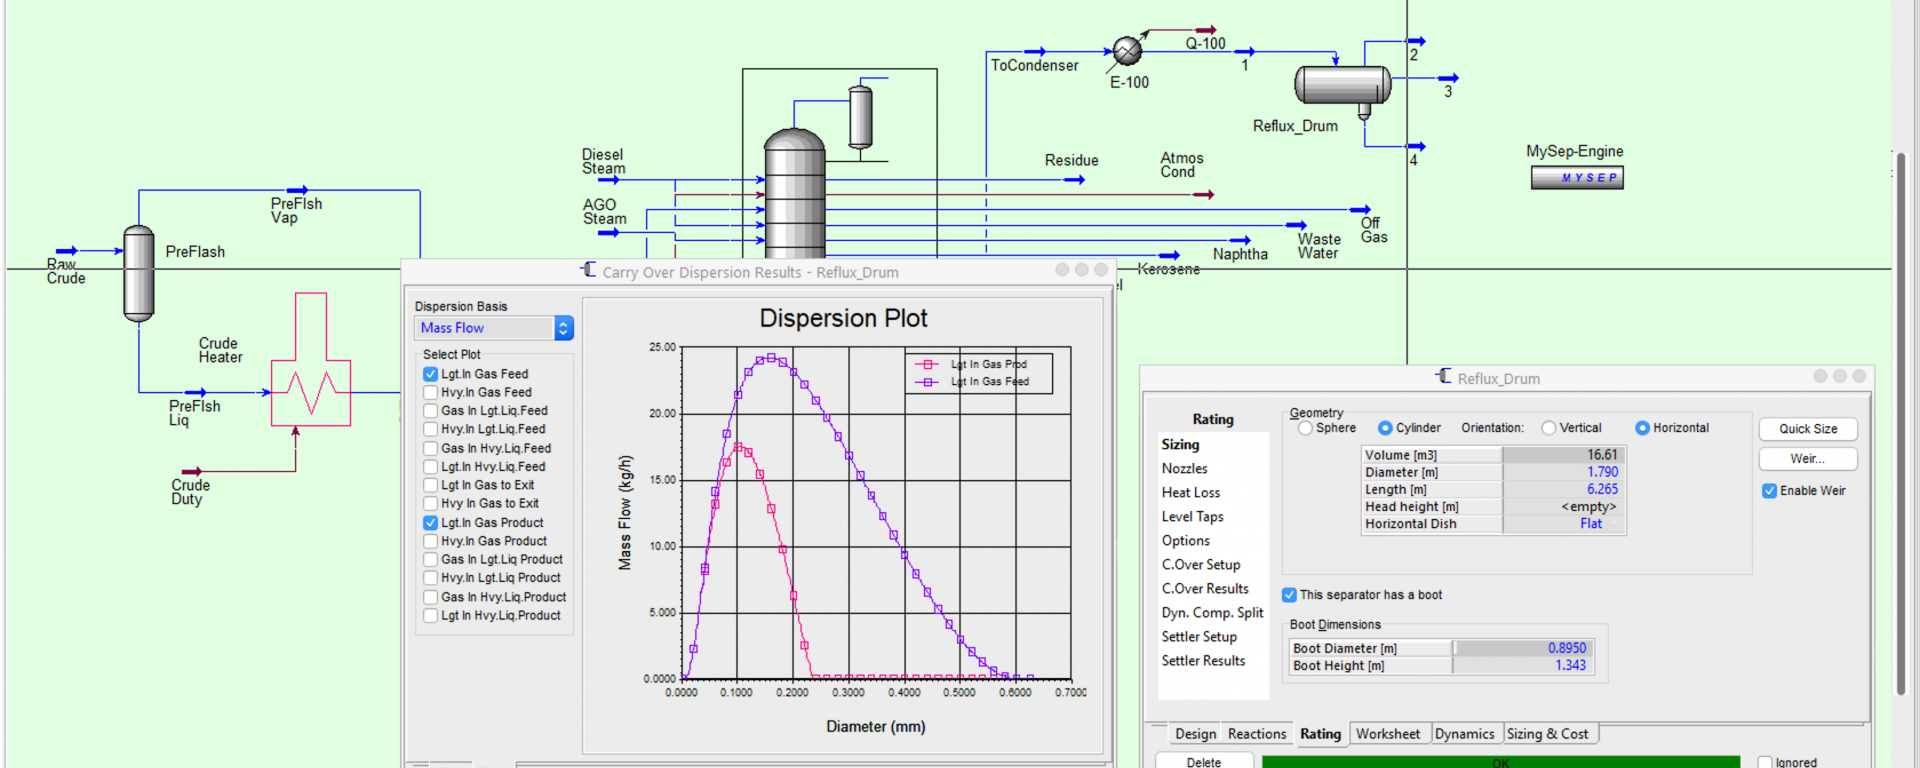 MySep Engine UniSim for a Refinery Crude Distillation Model